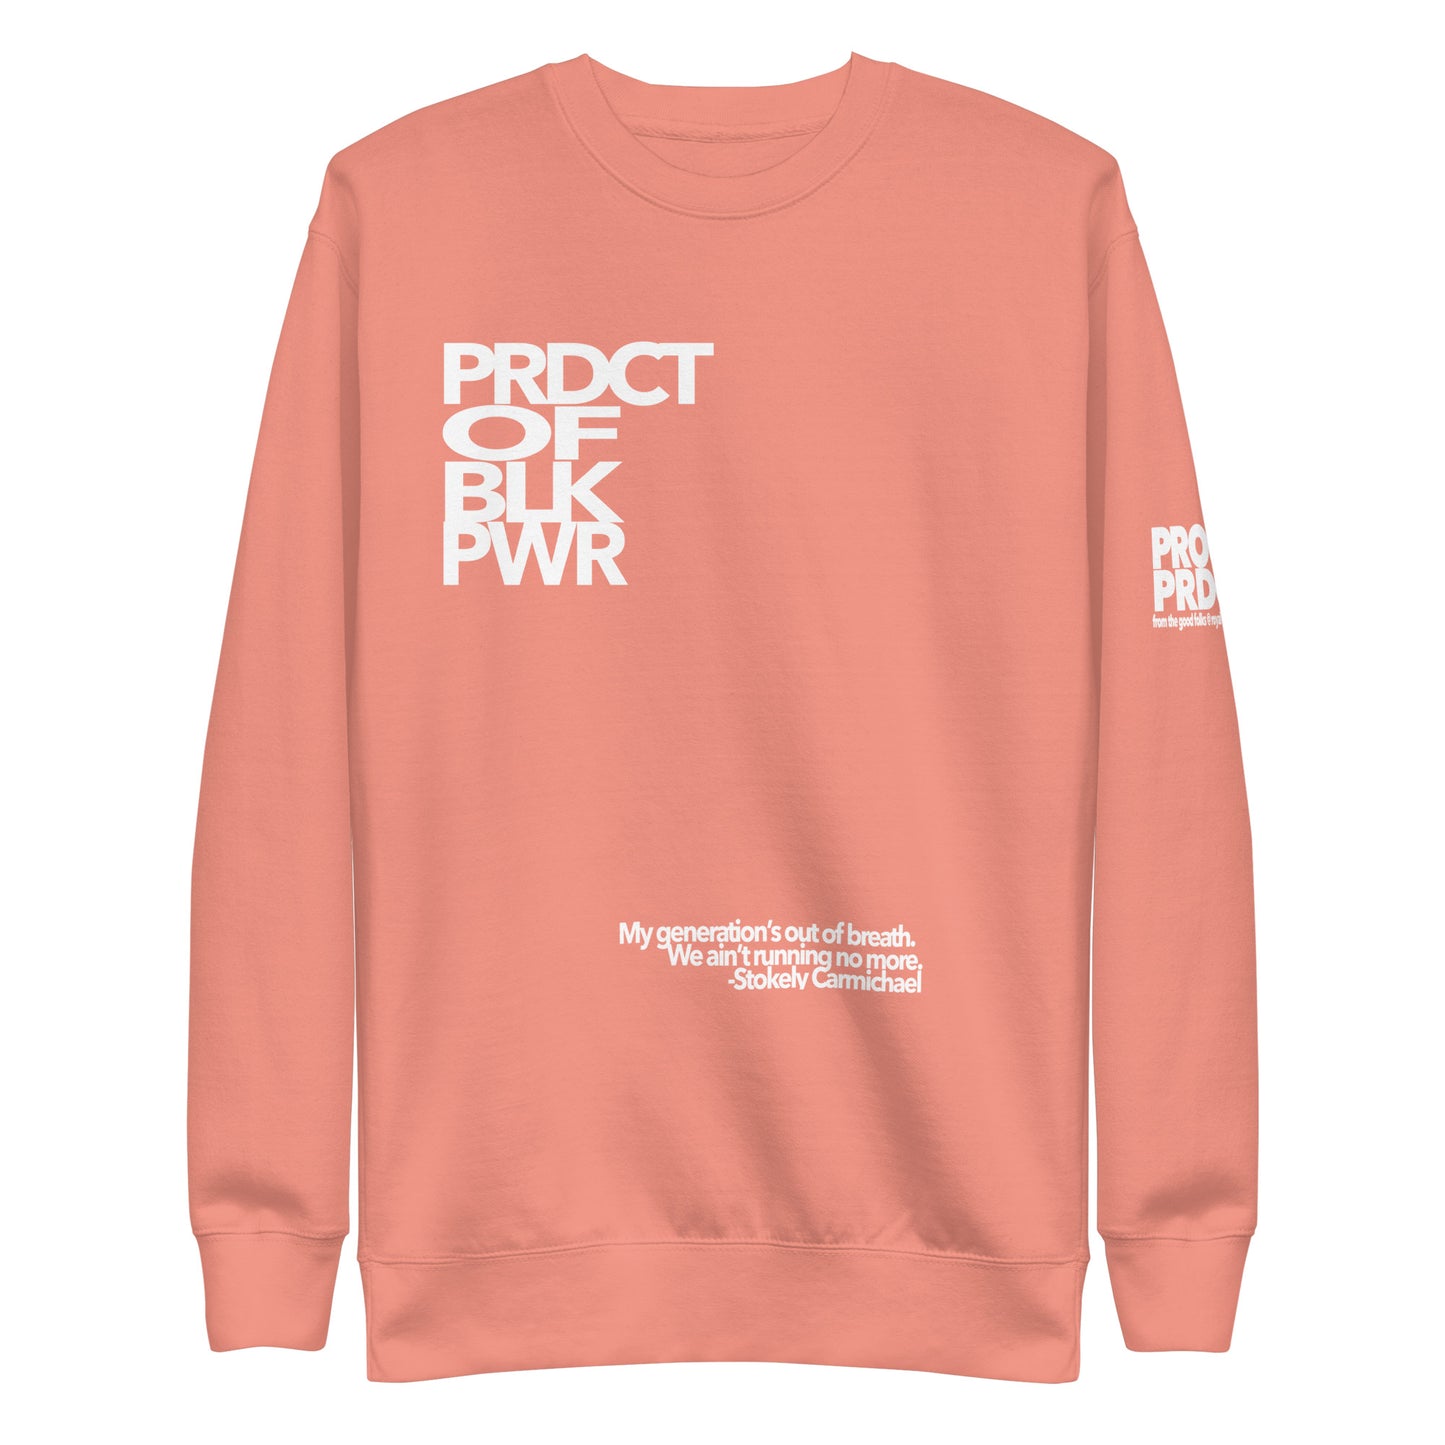 "Product of Black Power" Sweatshirt